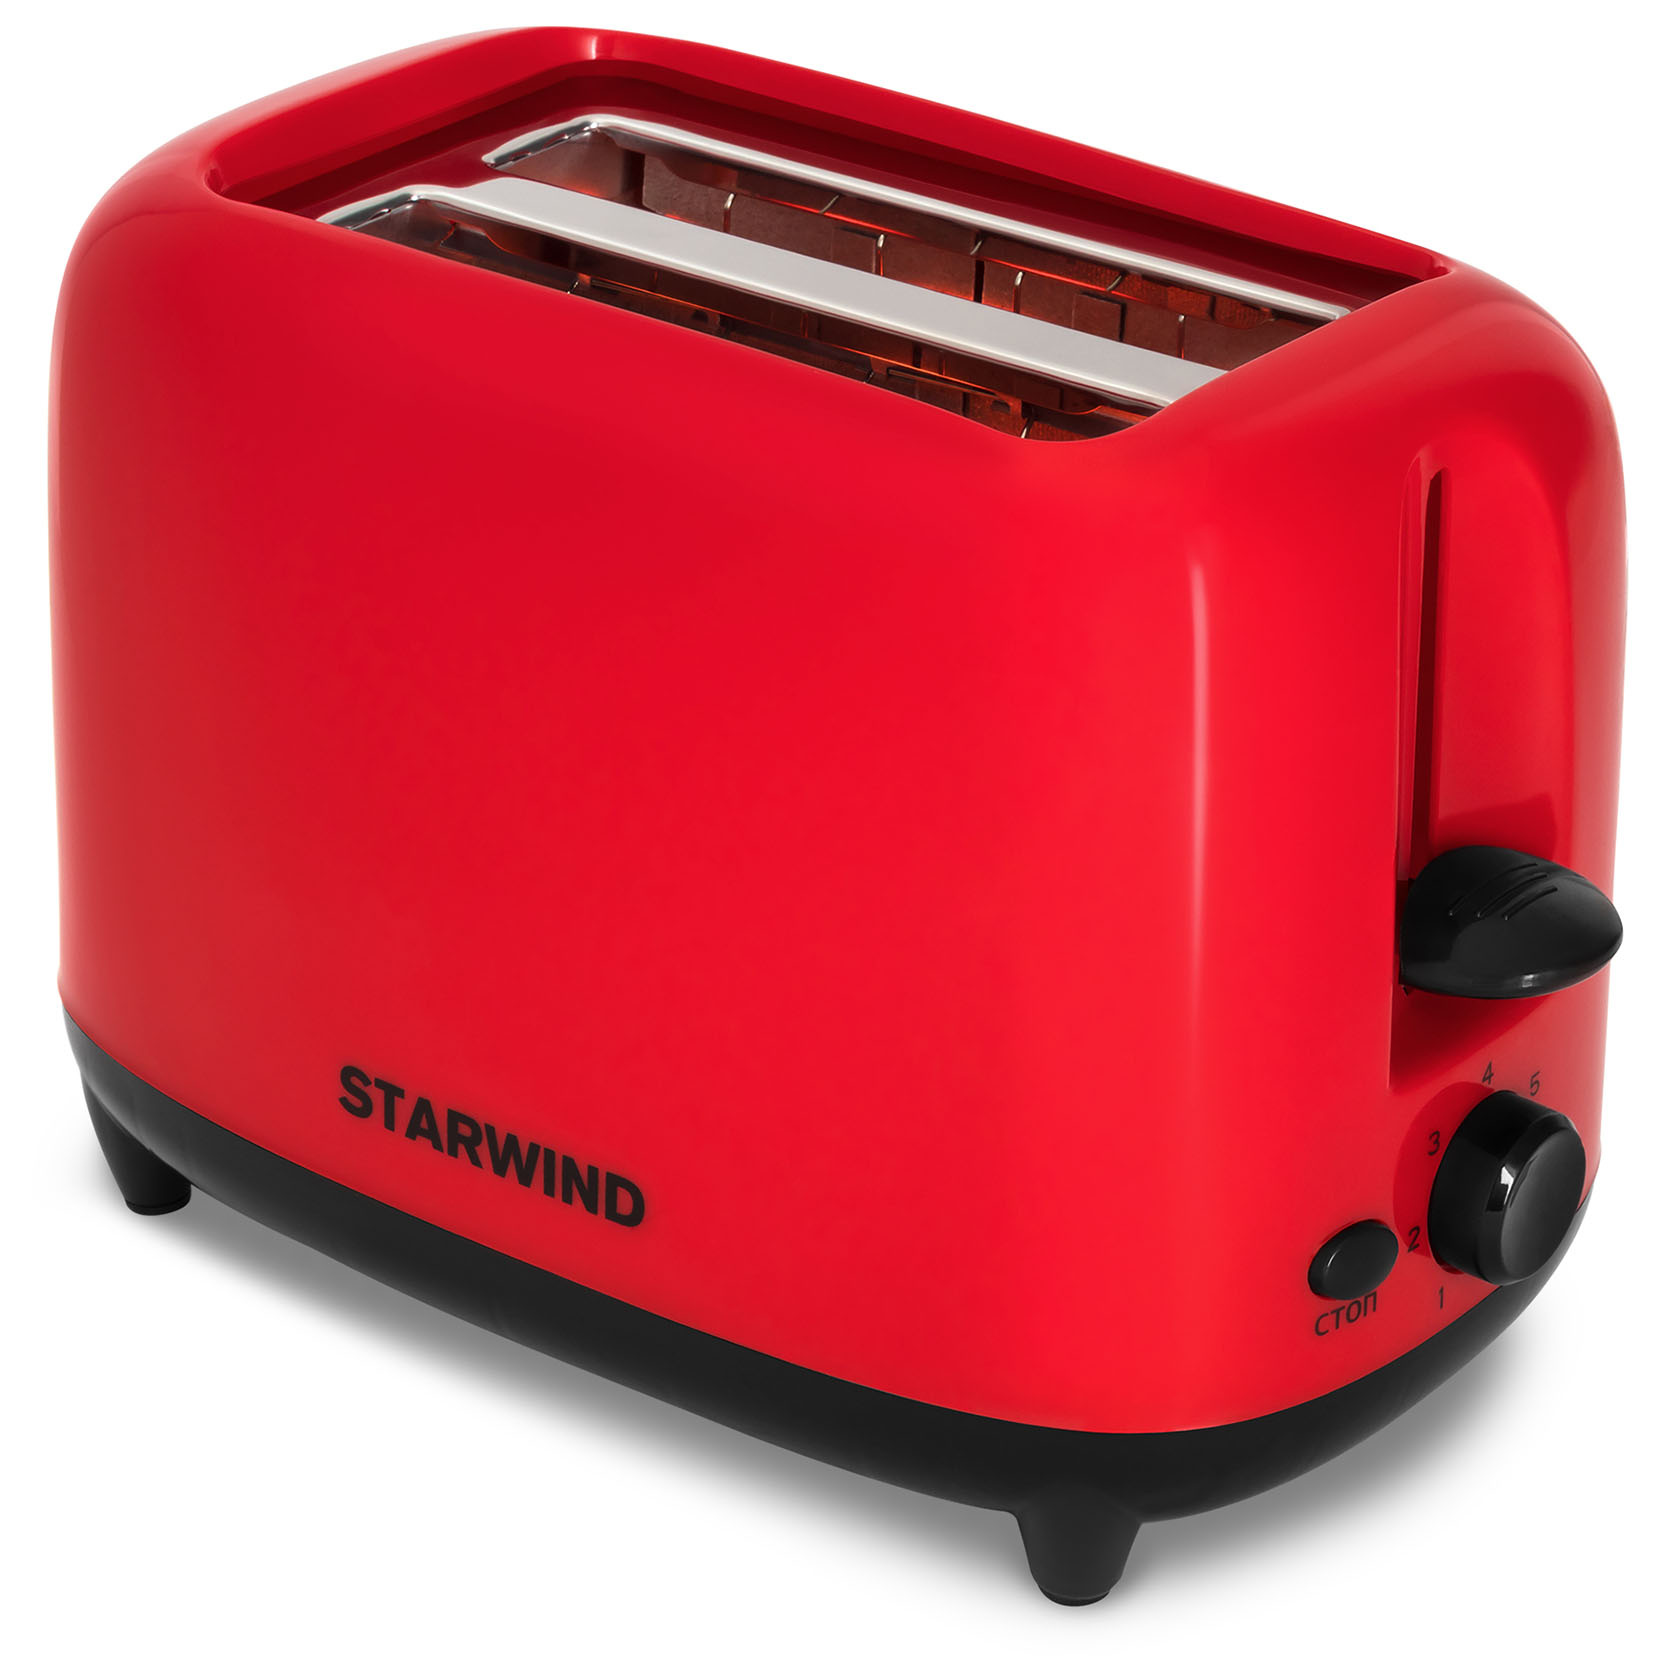 Тостер STARWIND ST7003 красный, черный тостер galaxy line 2919 красный